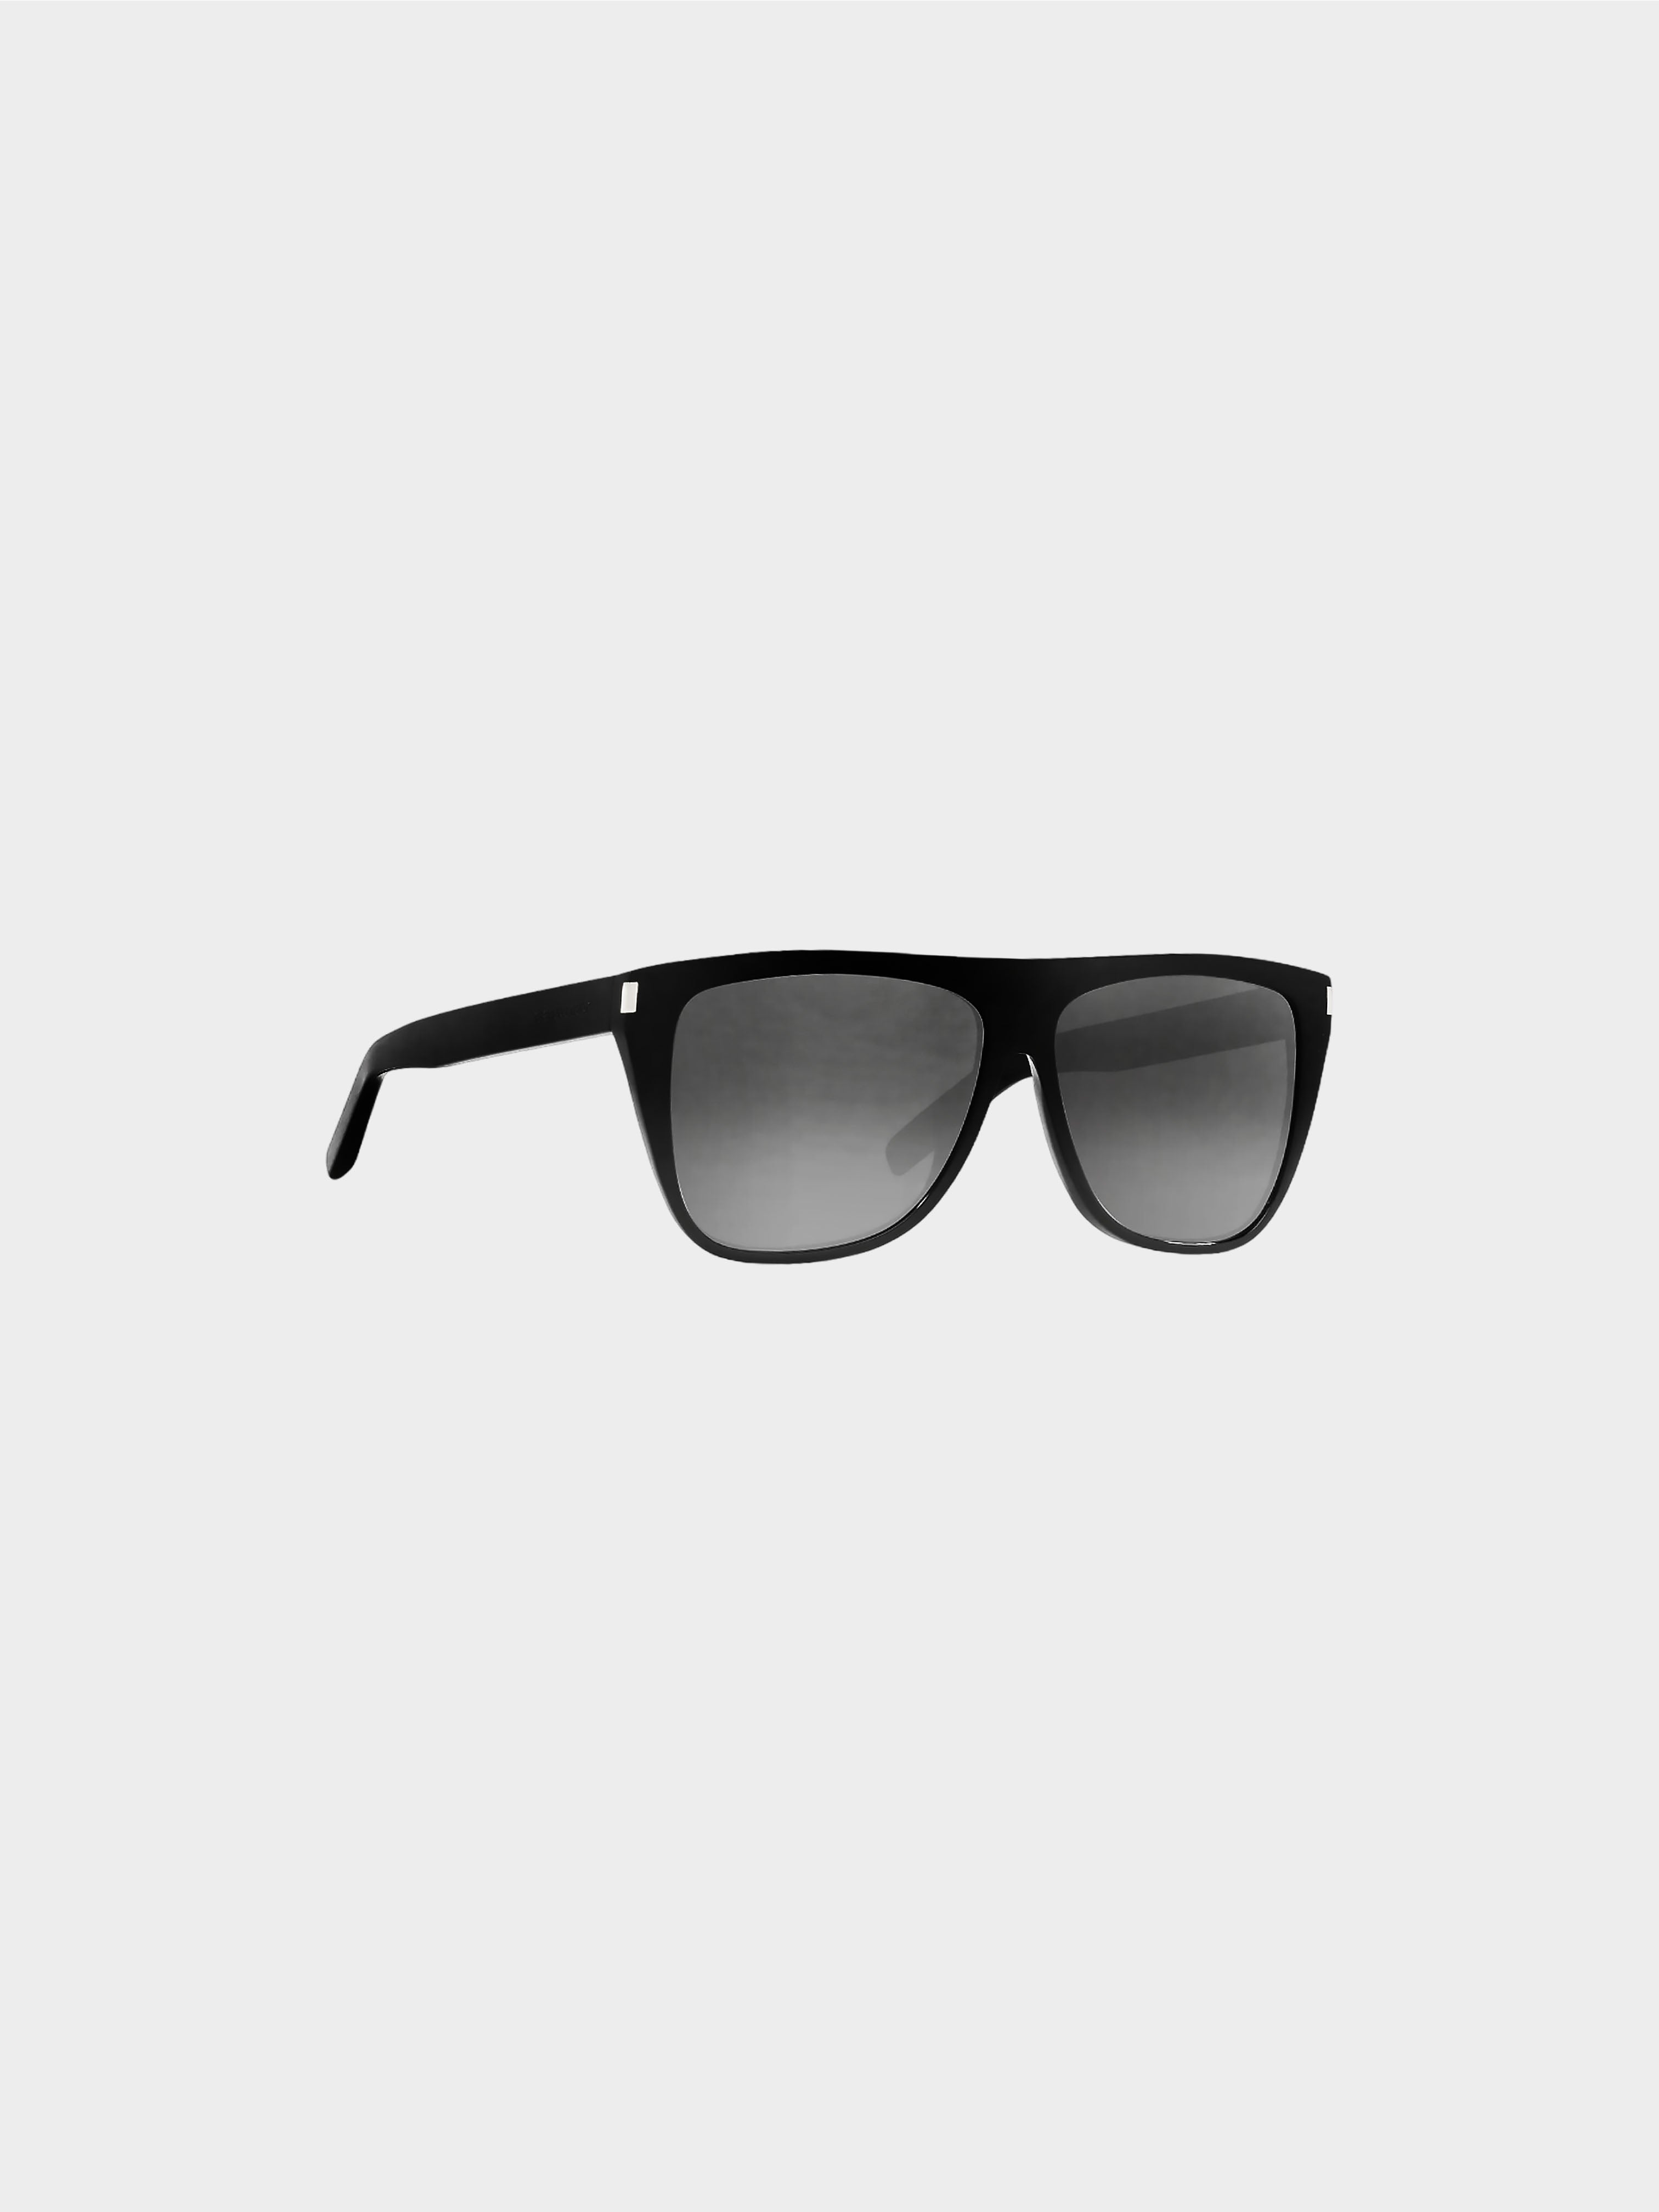 Yves Saint Laurent 2020s Black SL1 Sunglasses